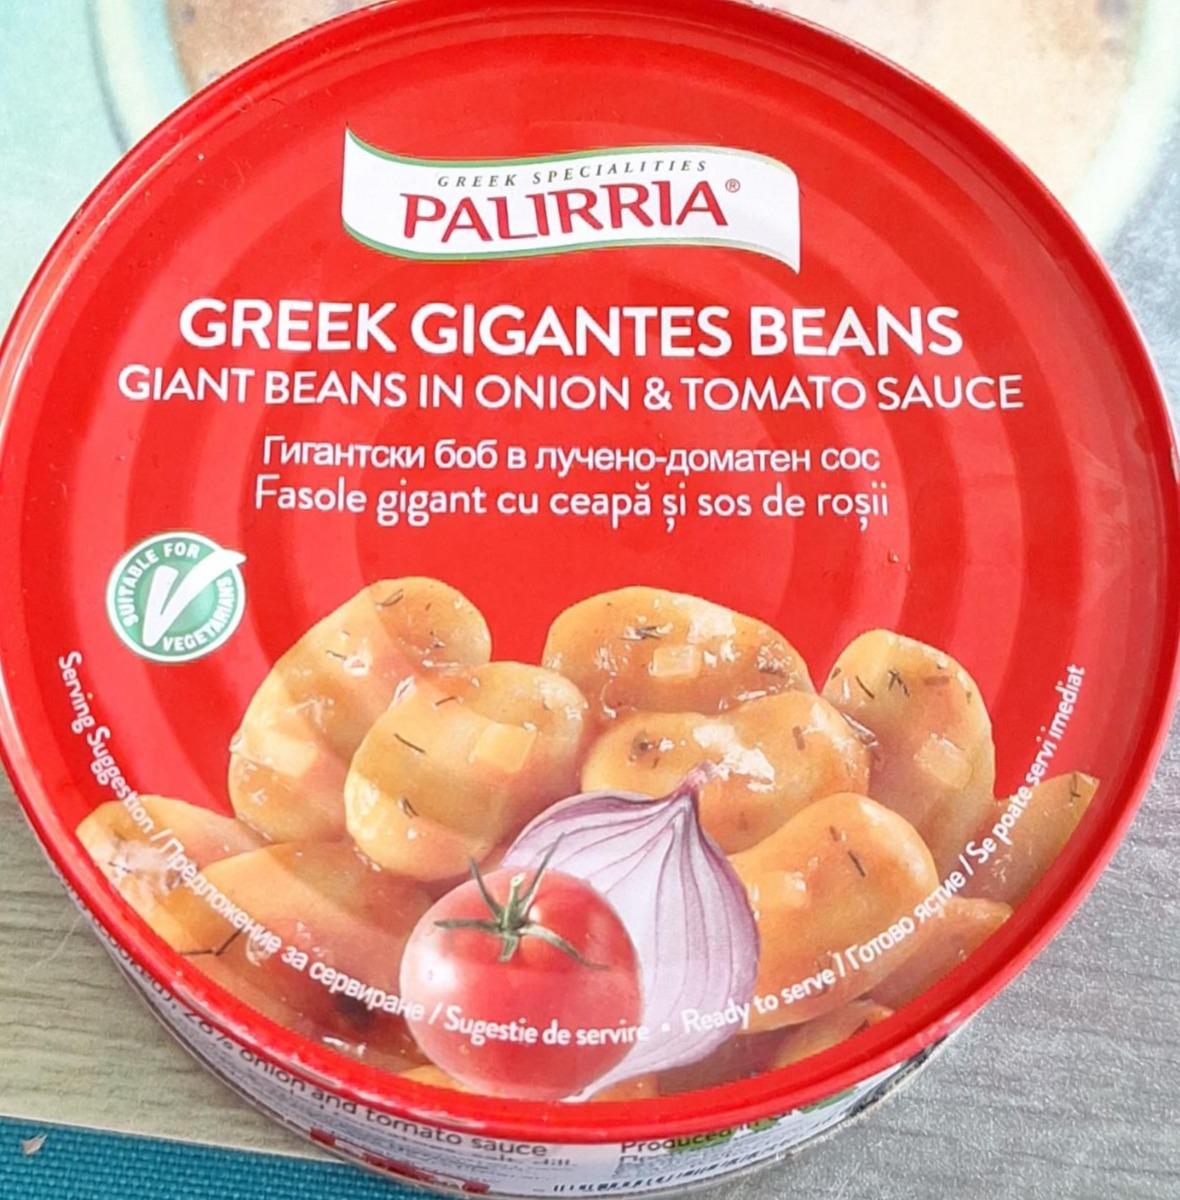 Фото - Greek Gigantes Beans in onion&tomato sauce Palirria